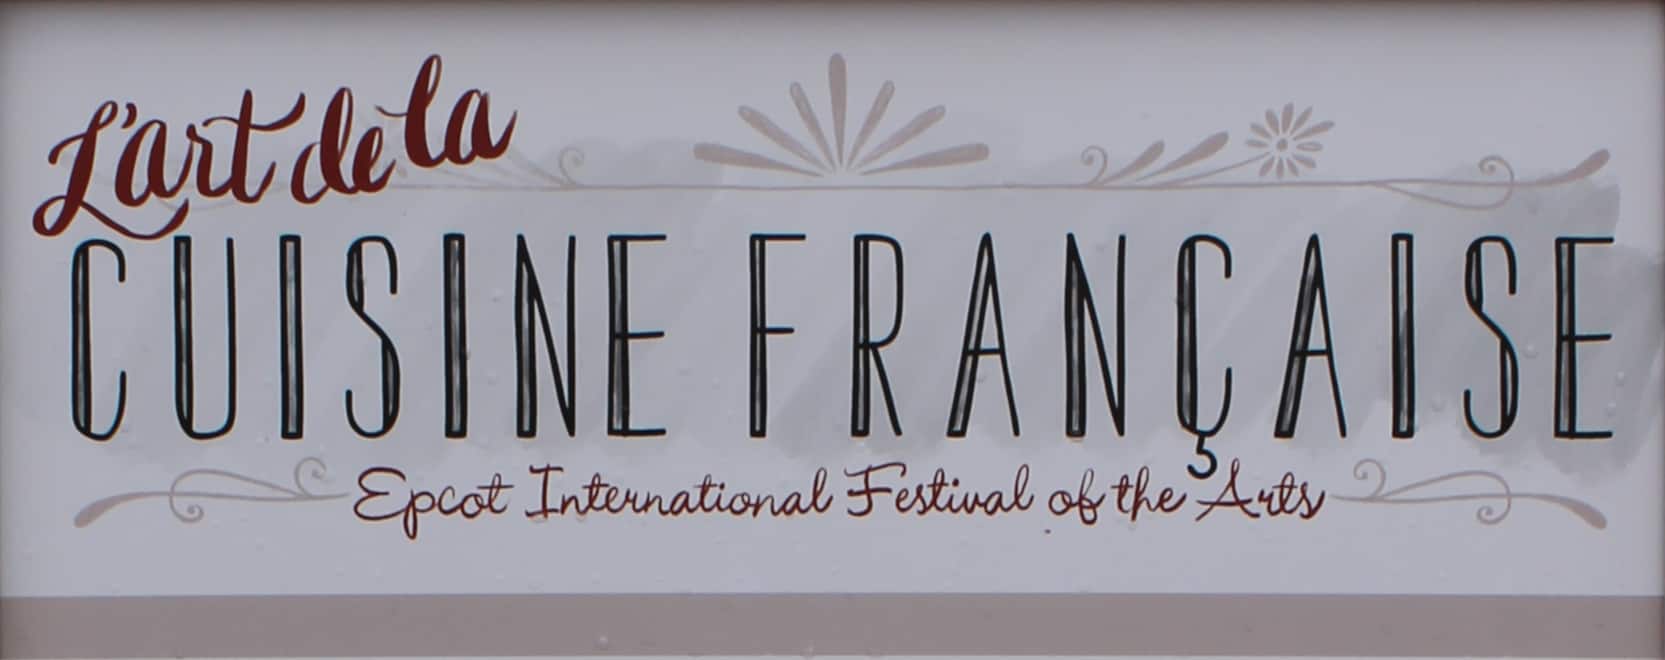 Epcot International Festival of the Arts - Cuisine Francaise